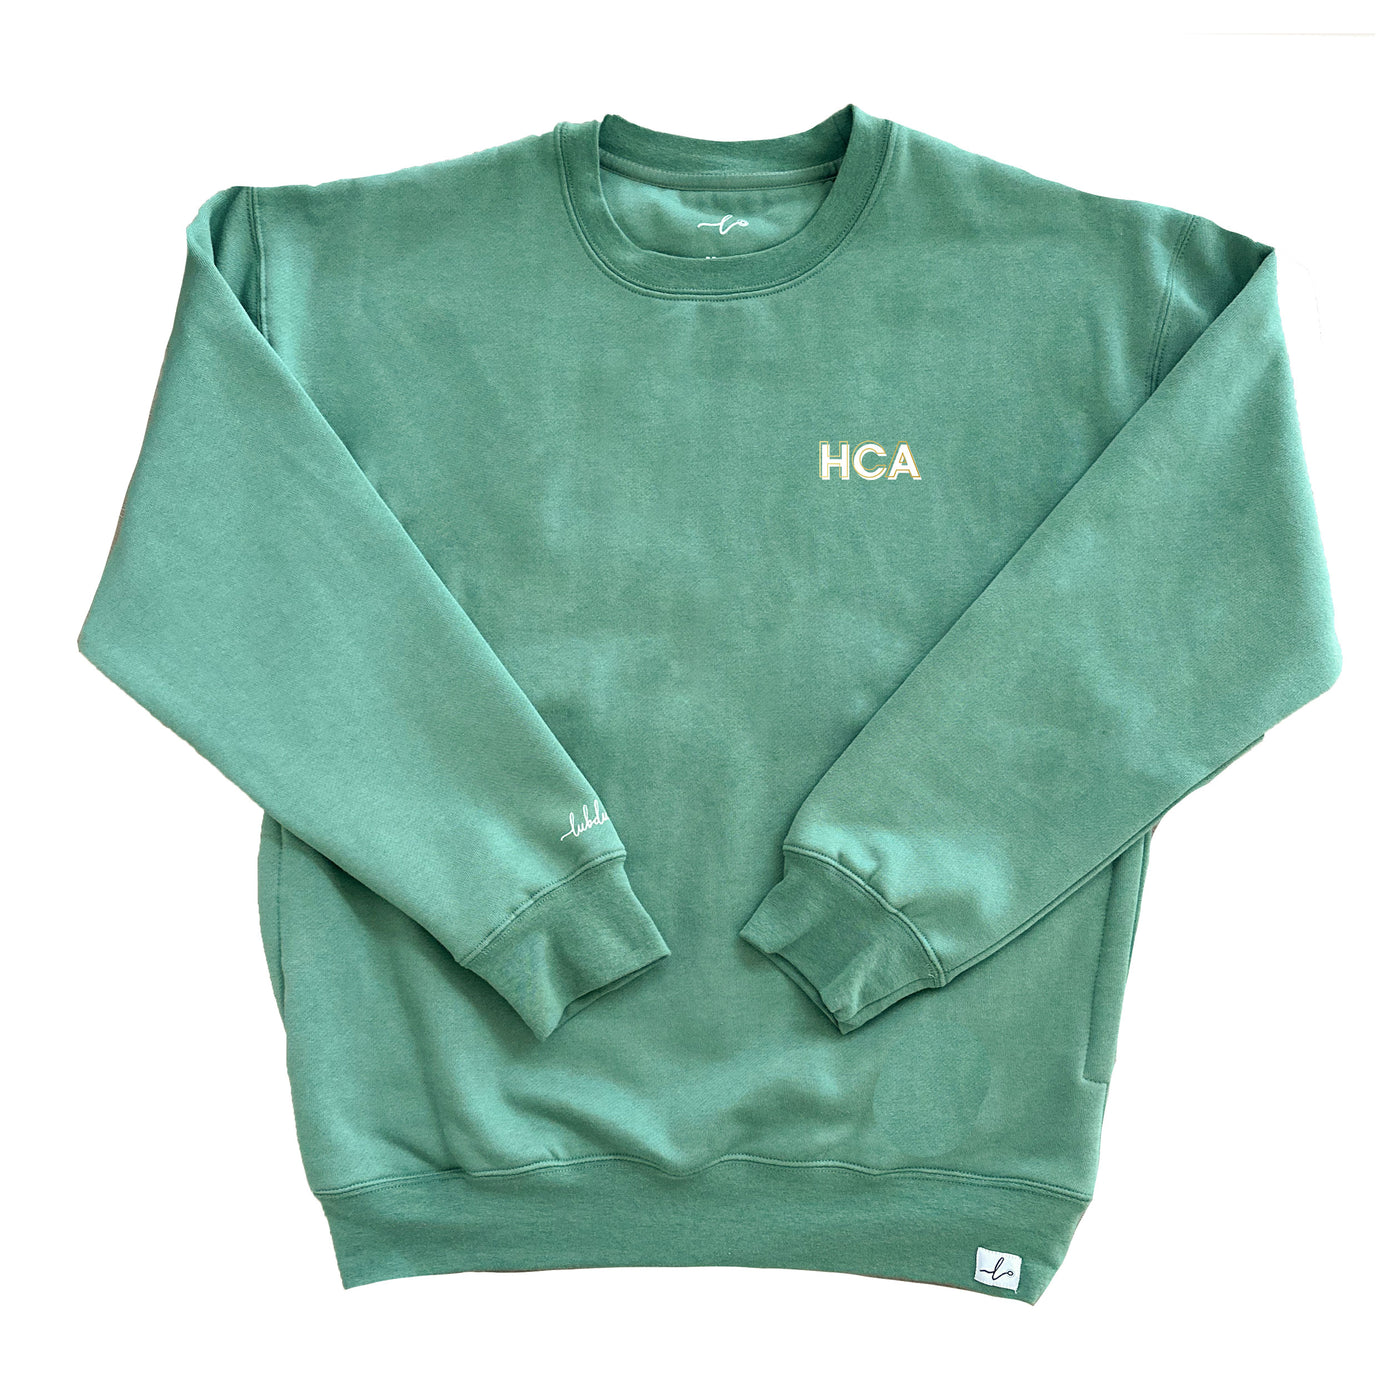 HCA Creds - Pocketed Crew Sweatshirt